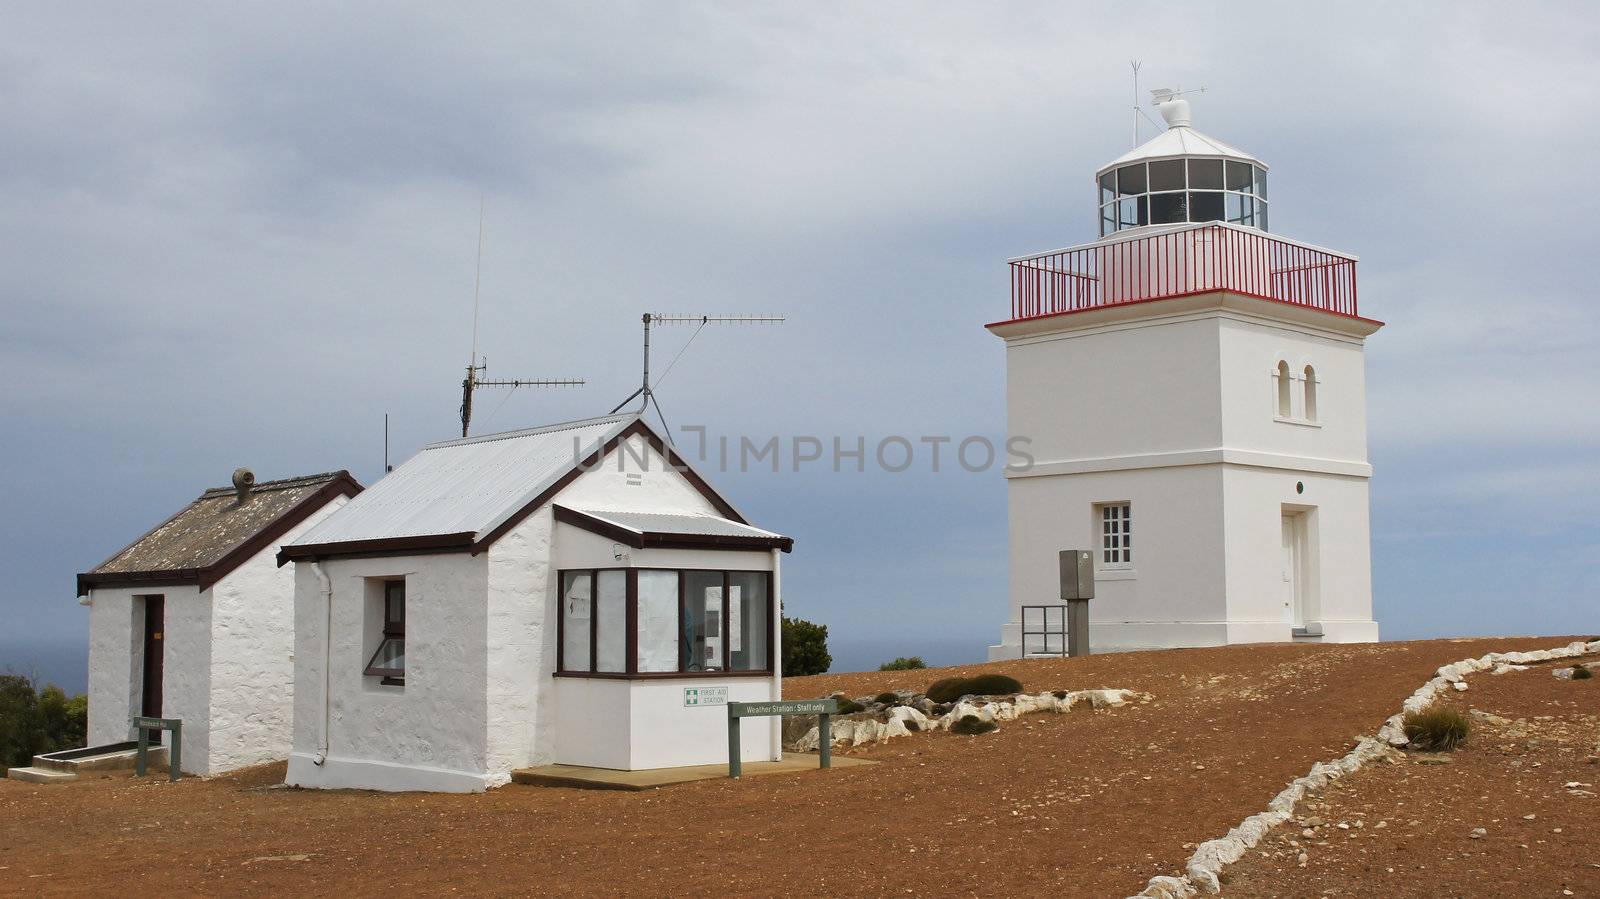 Lighthouse of Cape Borda, Kangaroo Island, Australia